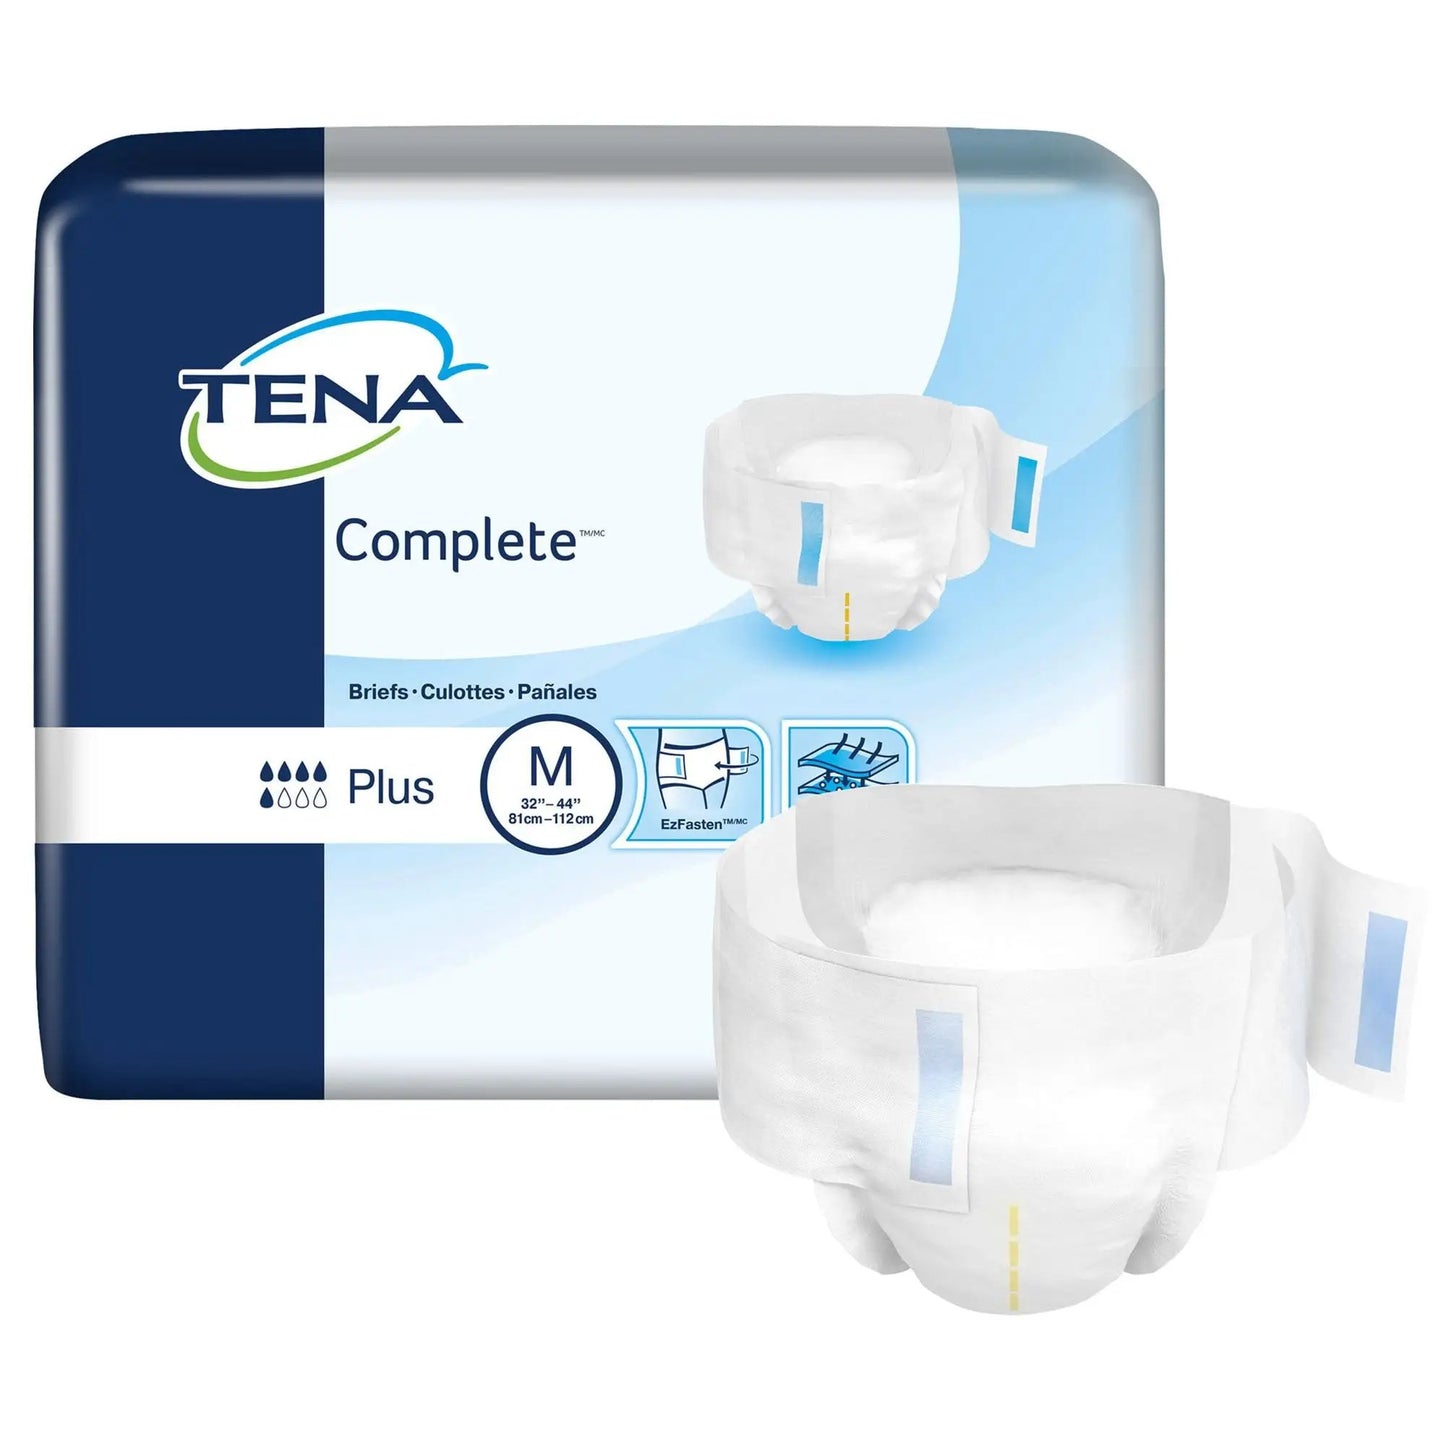 TENA Complete Unisex Adult Incontinence Brief Disposable Medium White